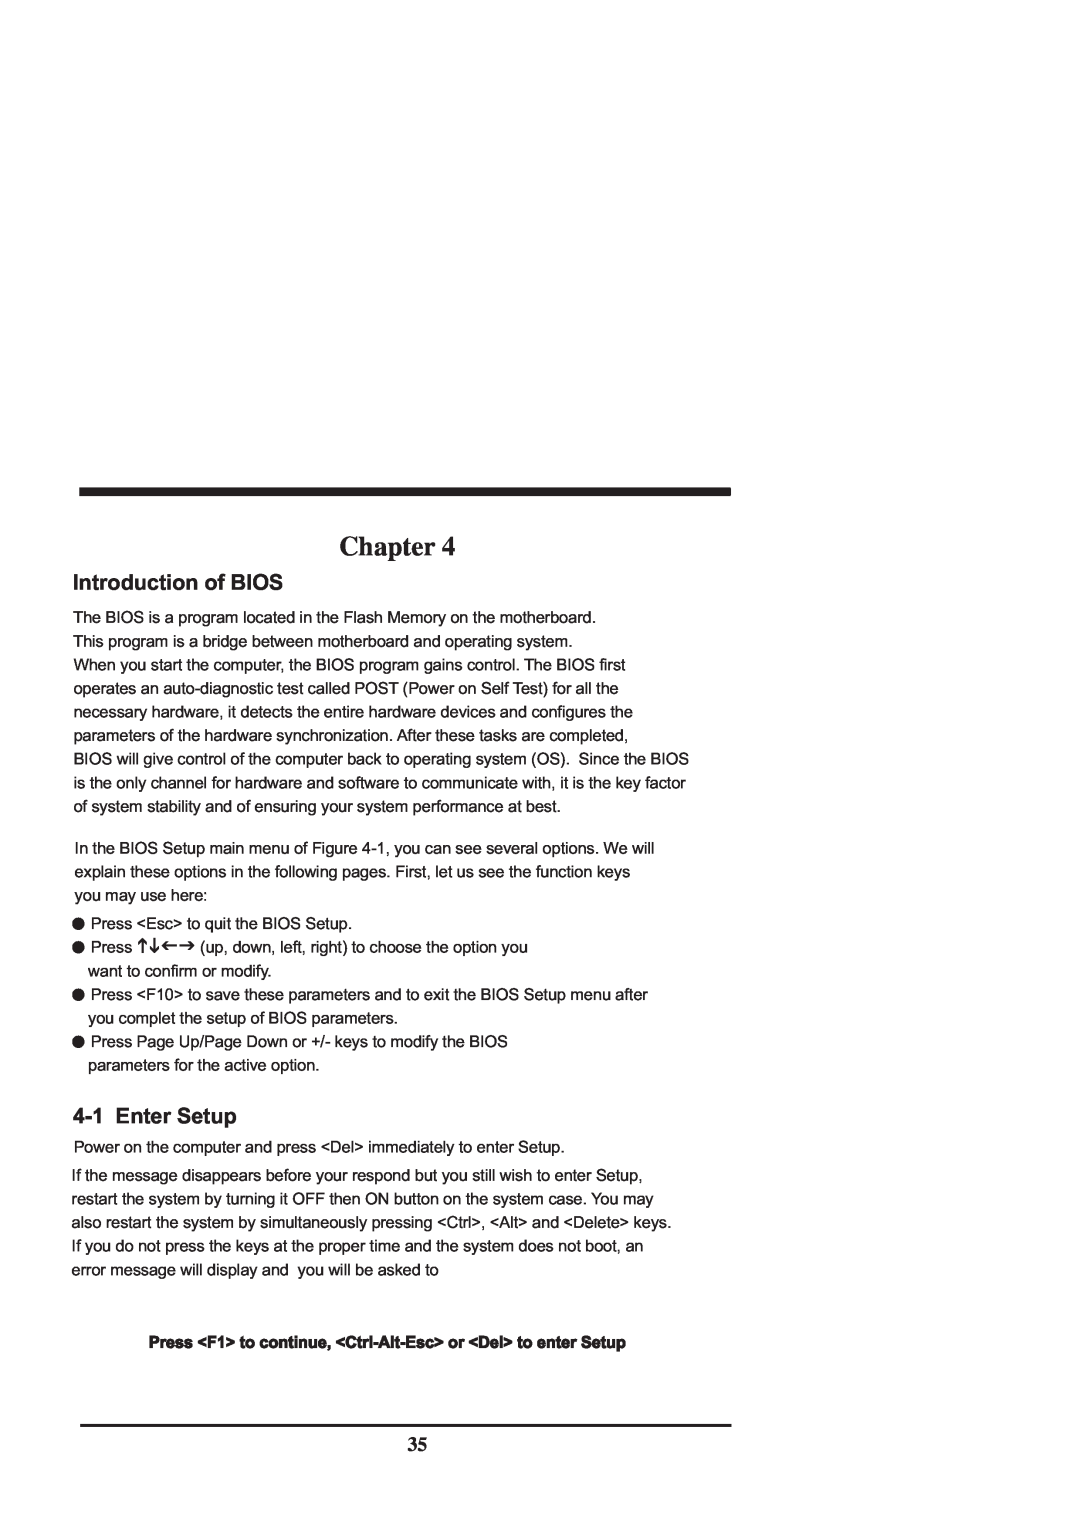 Intel CV702A, CV700A manual Chapter, Introduction of BIOS, 4-1Enter Setup 